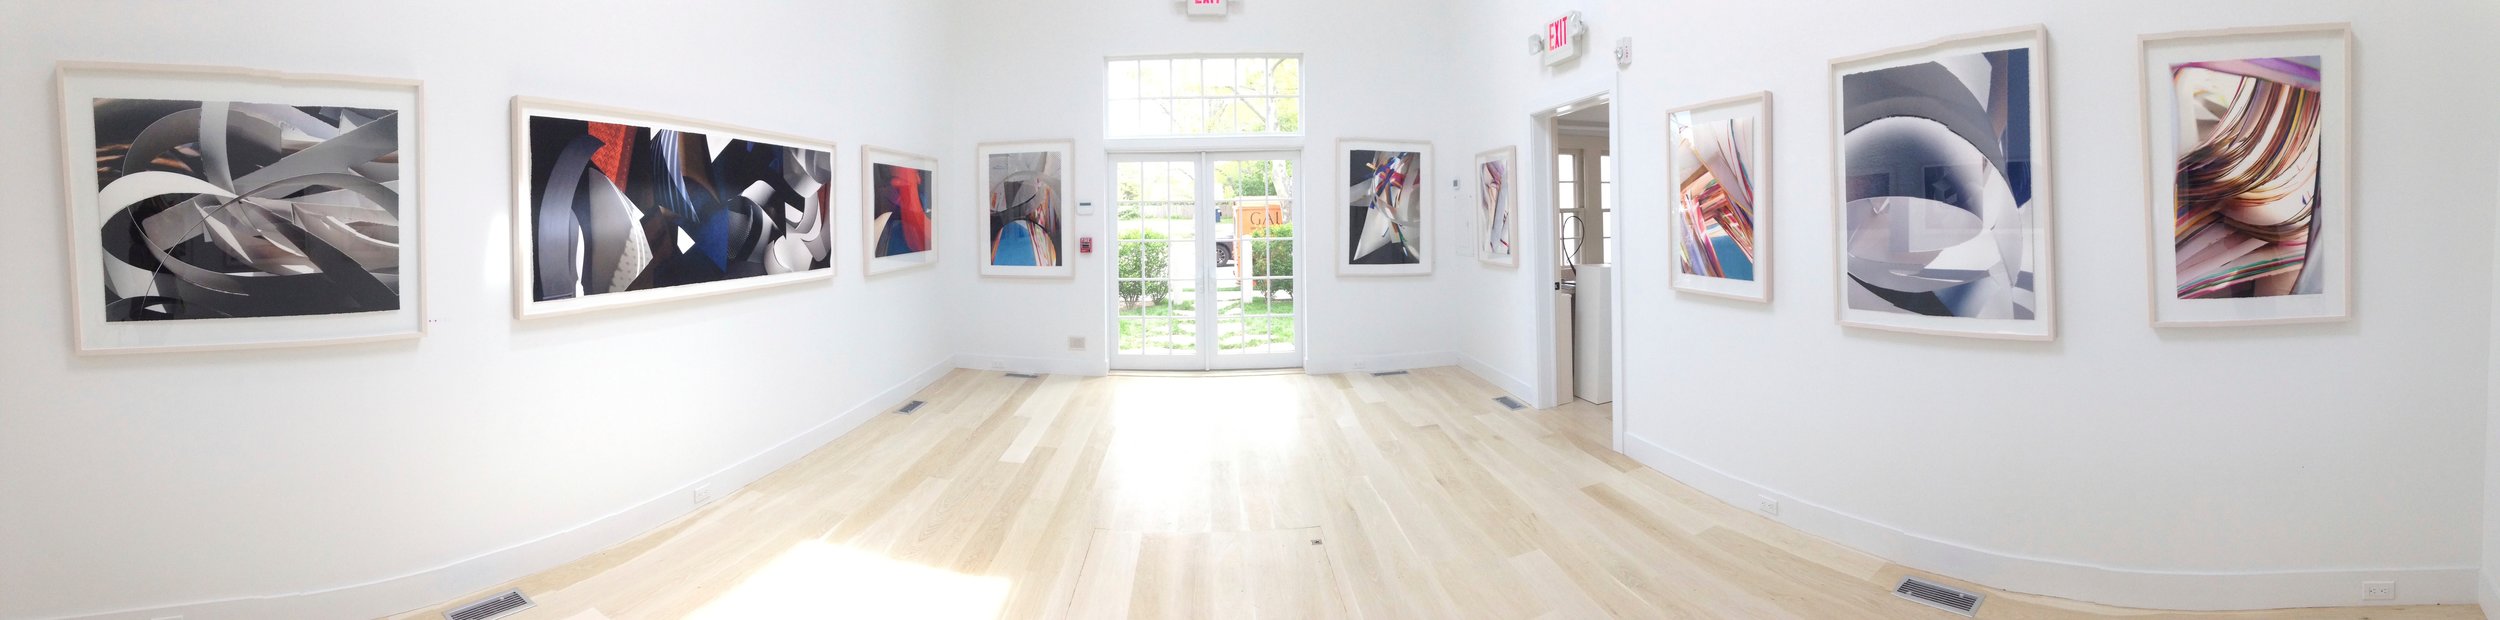 Quogue Gallery,NY, 2015.jpg